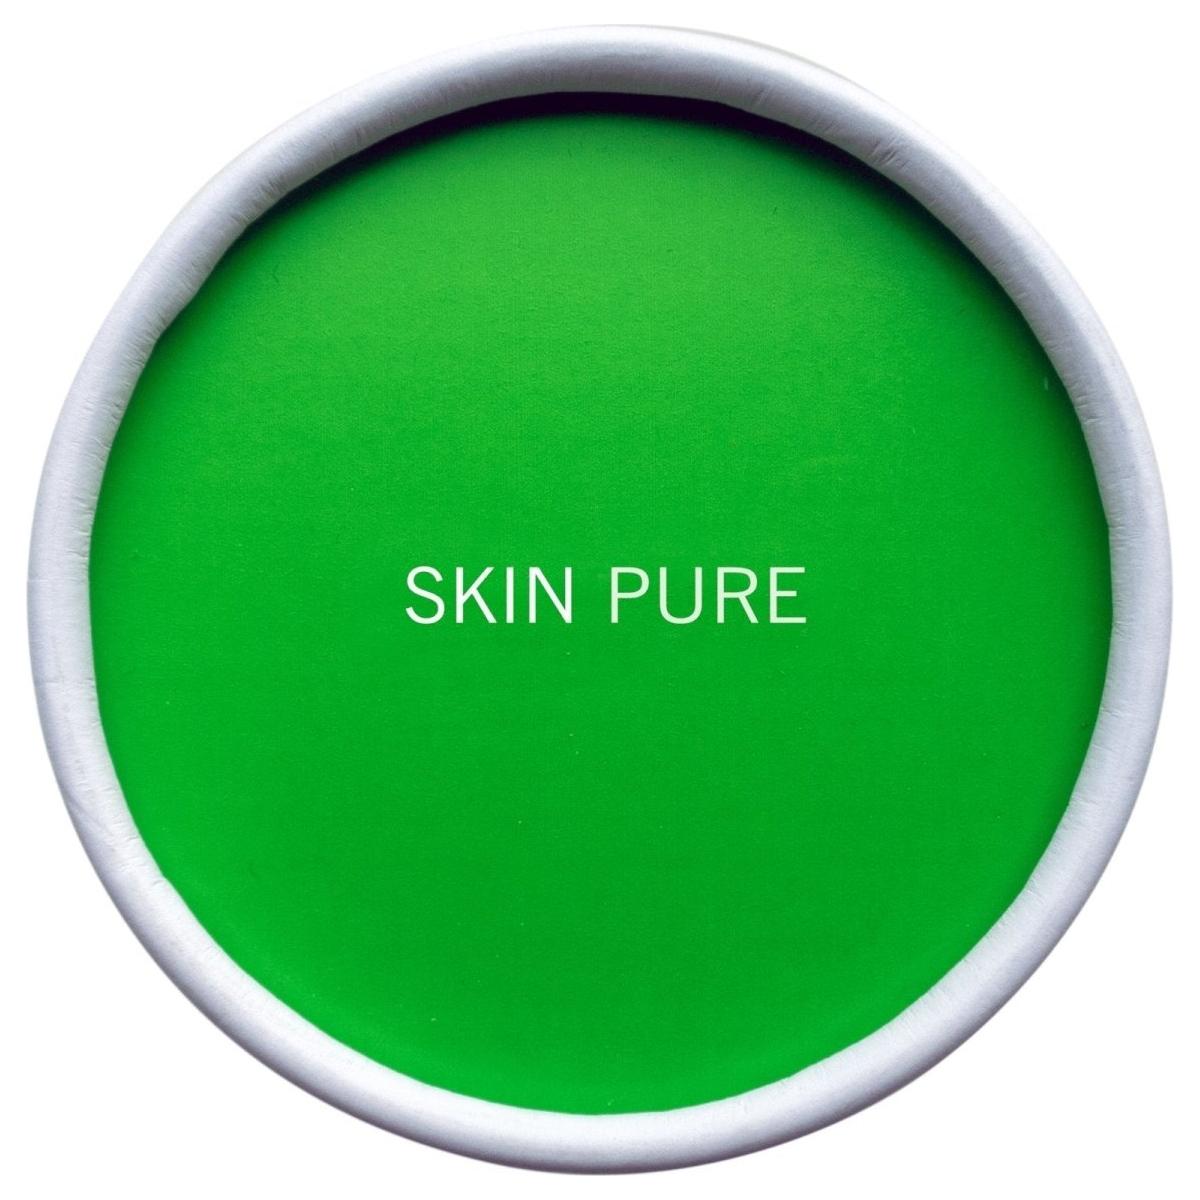 Advanced Nutrition Programme | Skin Pure | 60 caps - DG International Ventures Limited